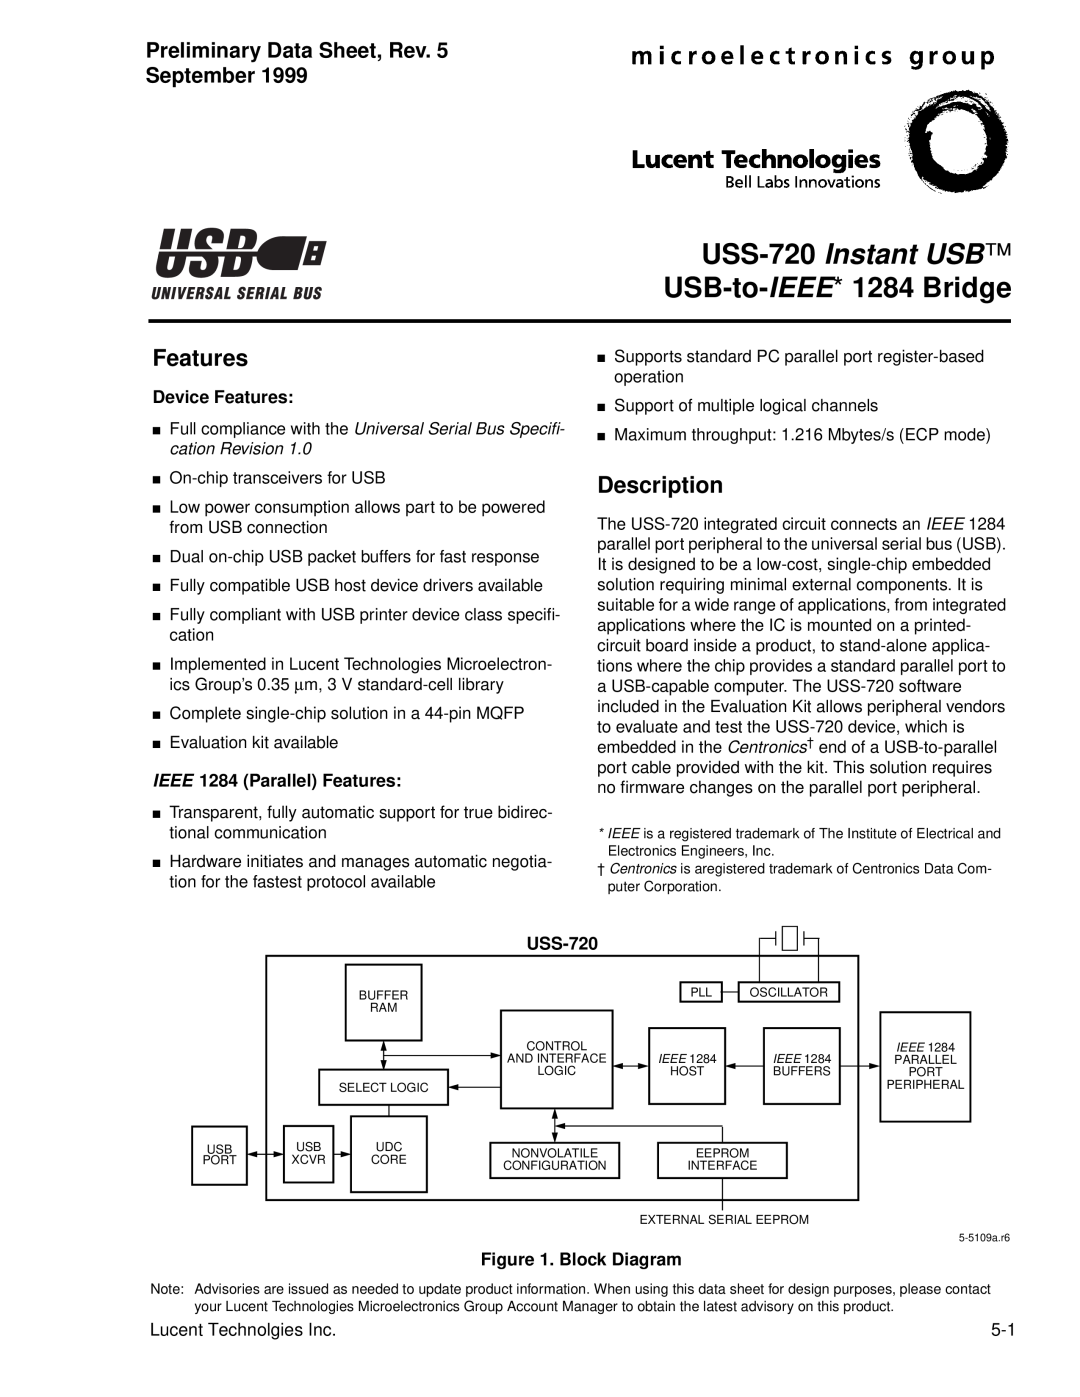 Lucent Technologies USS-720 manual USB-to-IEEE* 1284 Bridge, Features, Description, Preliminary Data Sheet, Rev September 